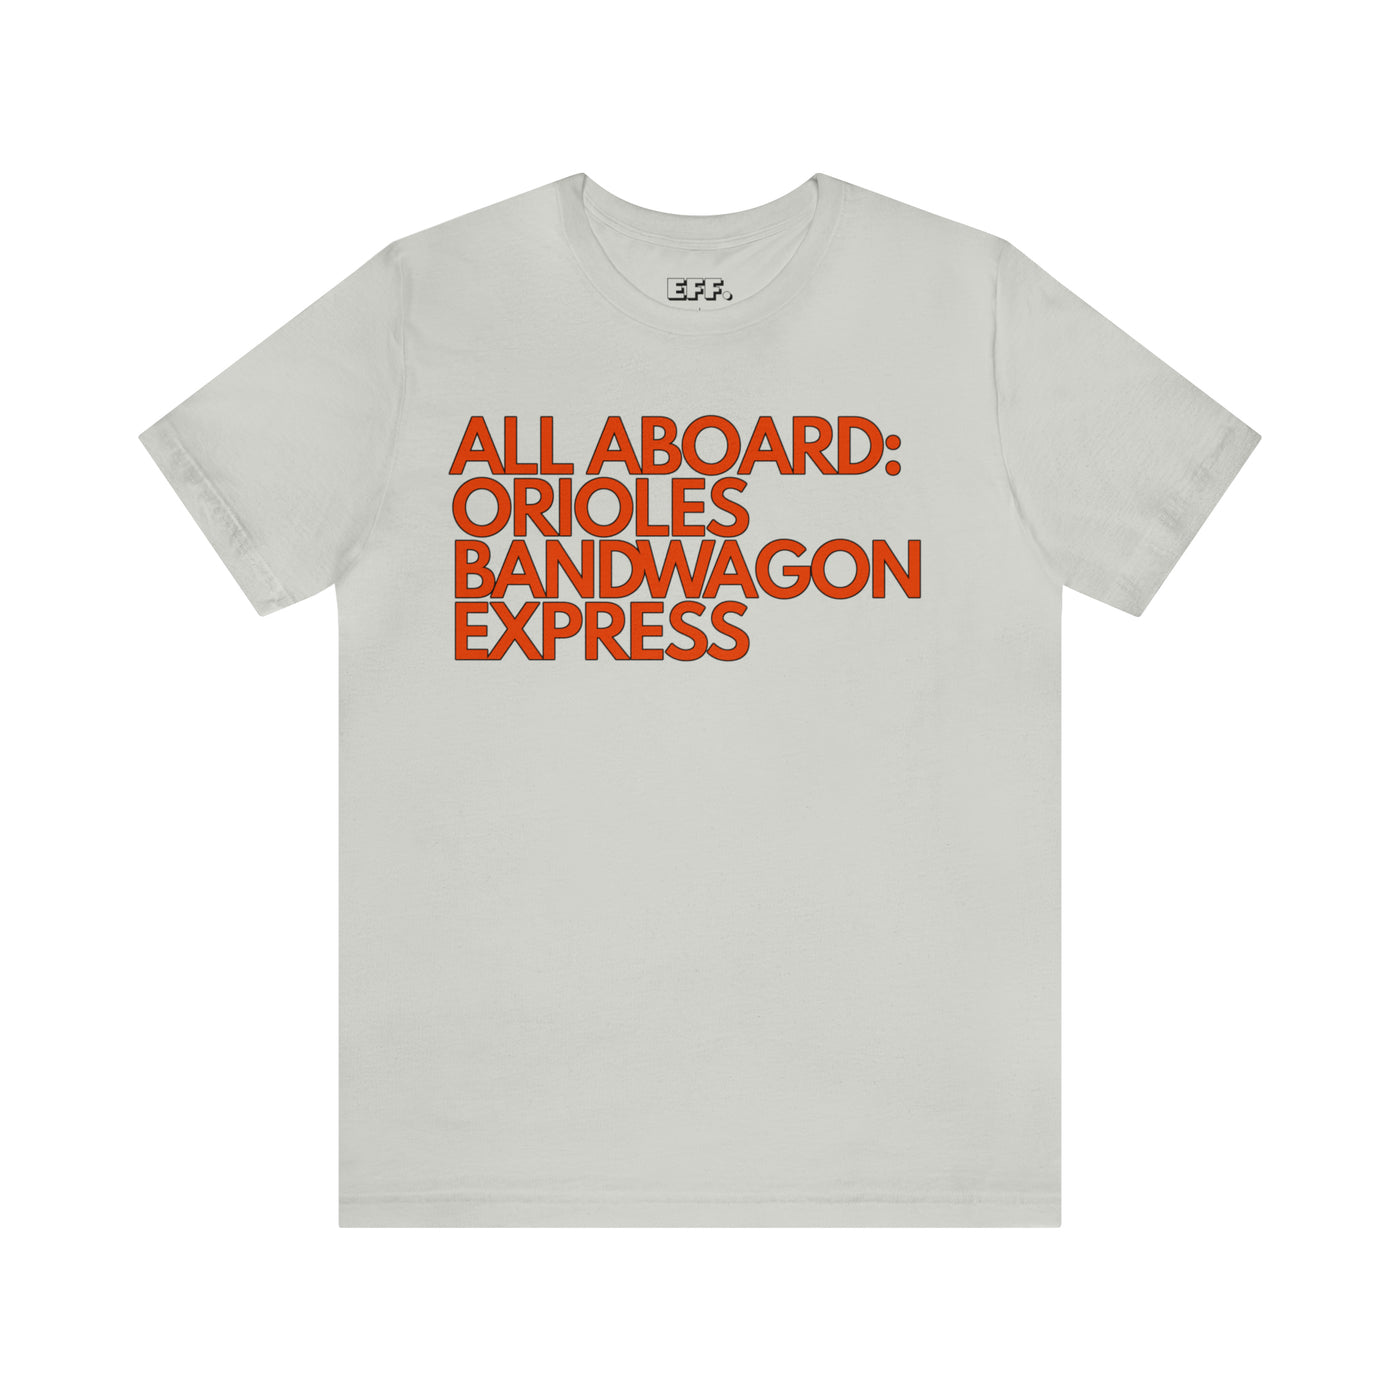 All Aboard: Orioles Bandwagon Express